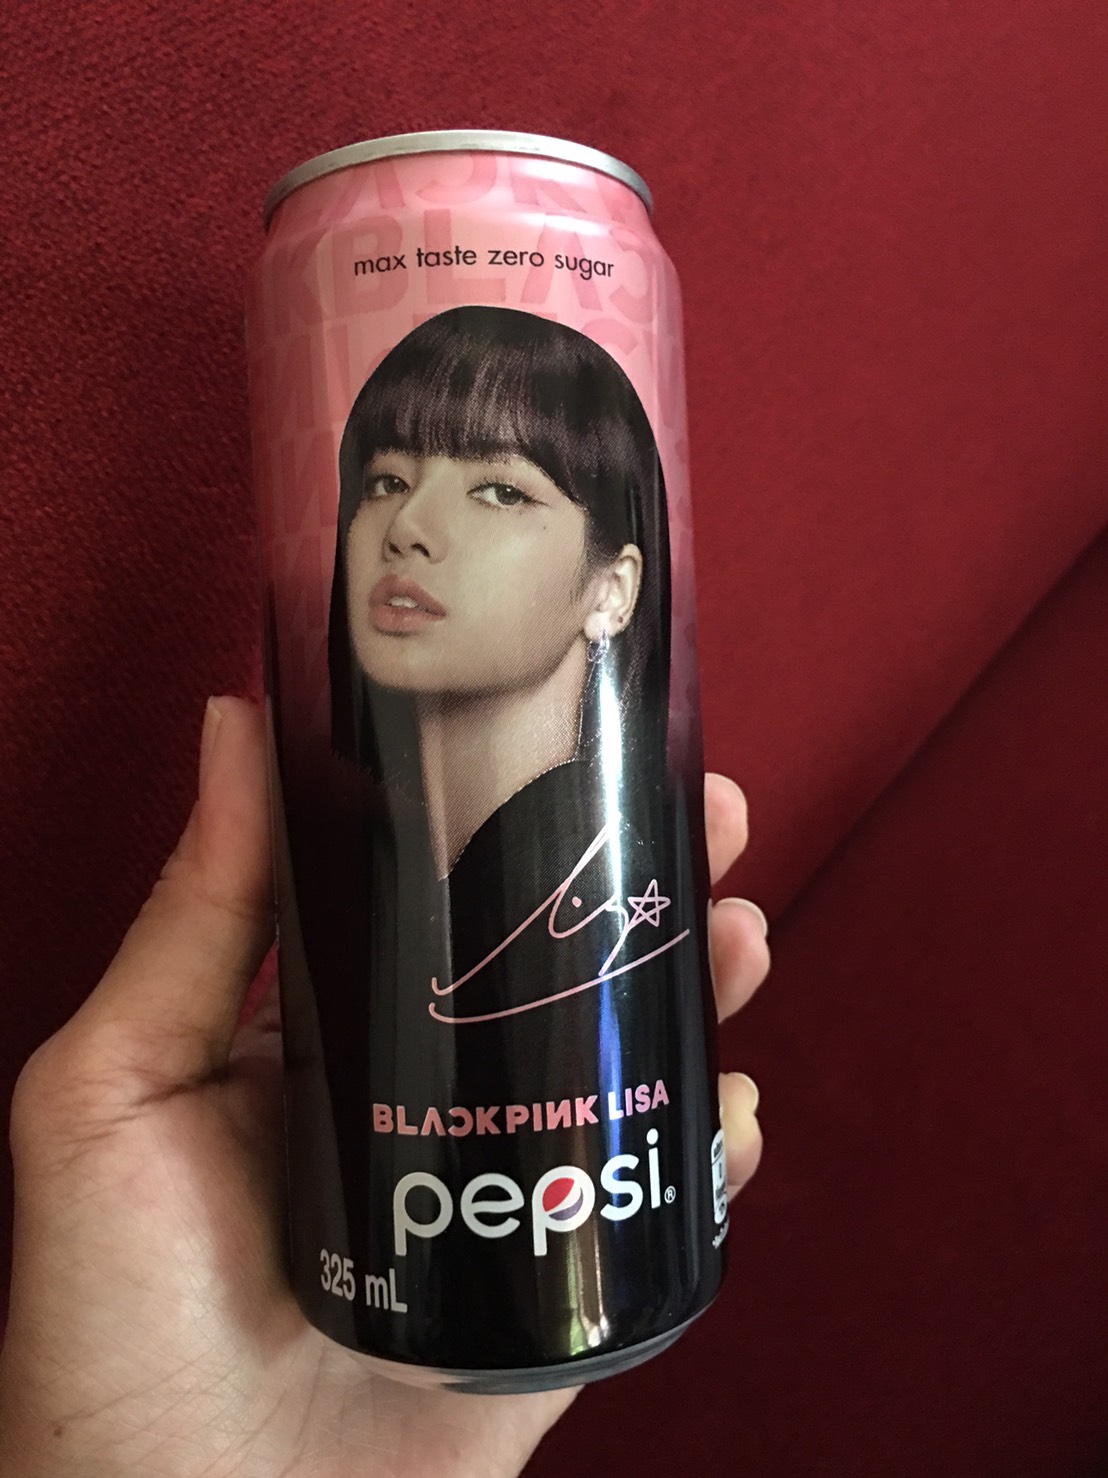 Pepsi x blackpink Limited Edition Lisa size 325 ml.1 กระป๋อง ไม่มีนำ้ตาล